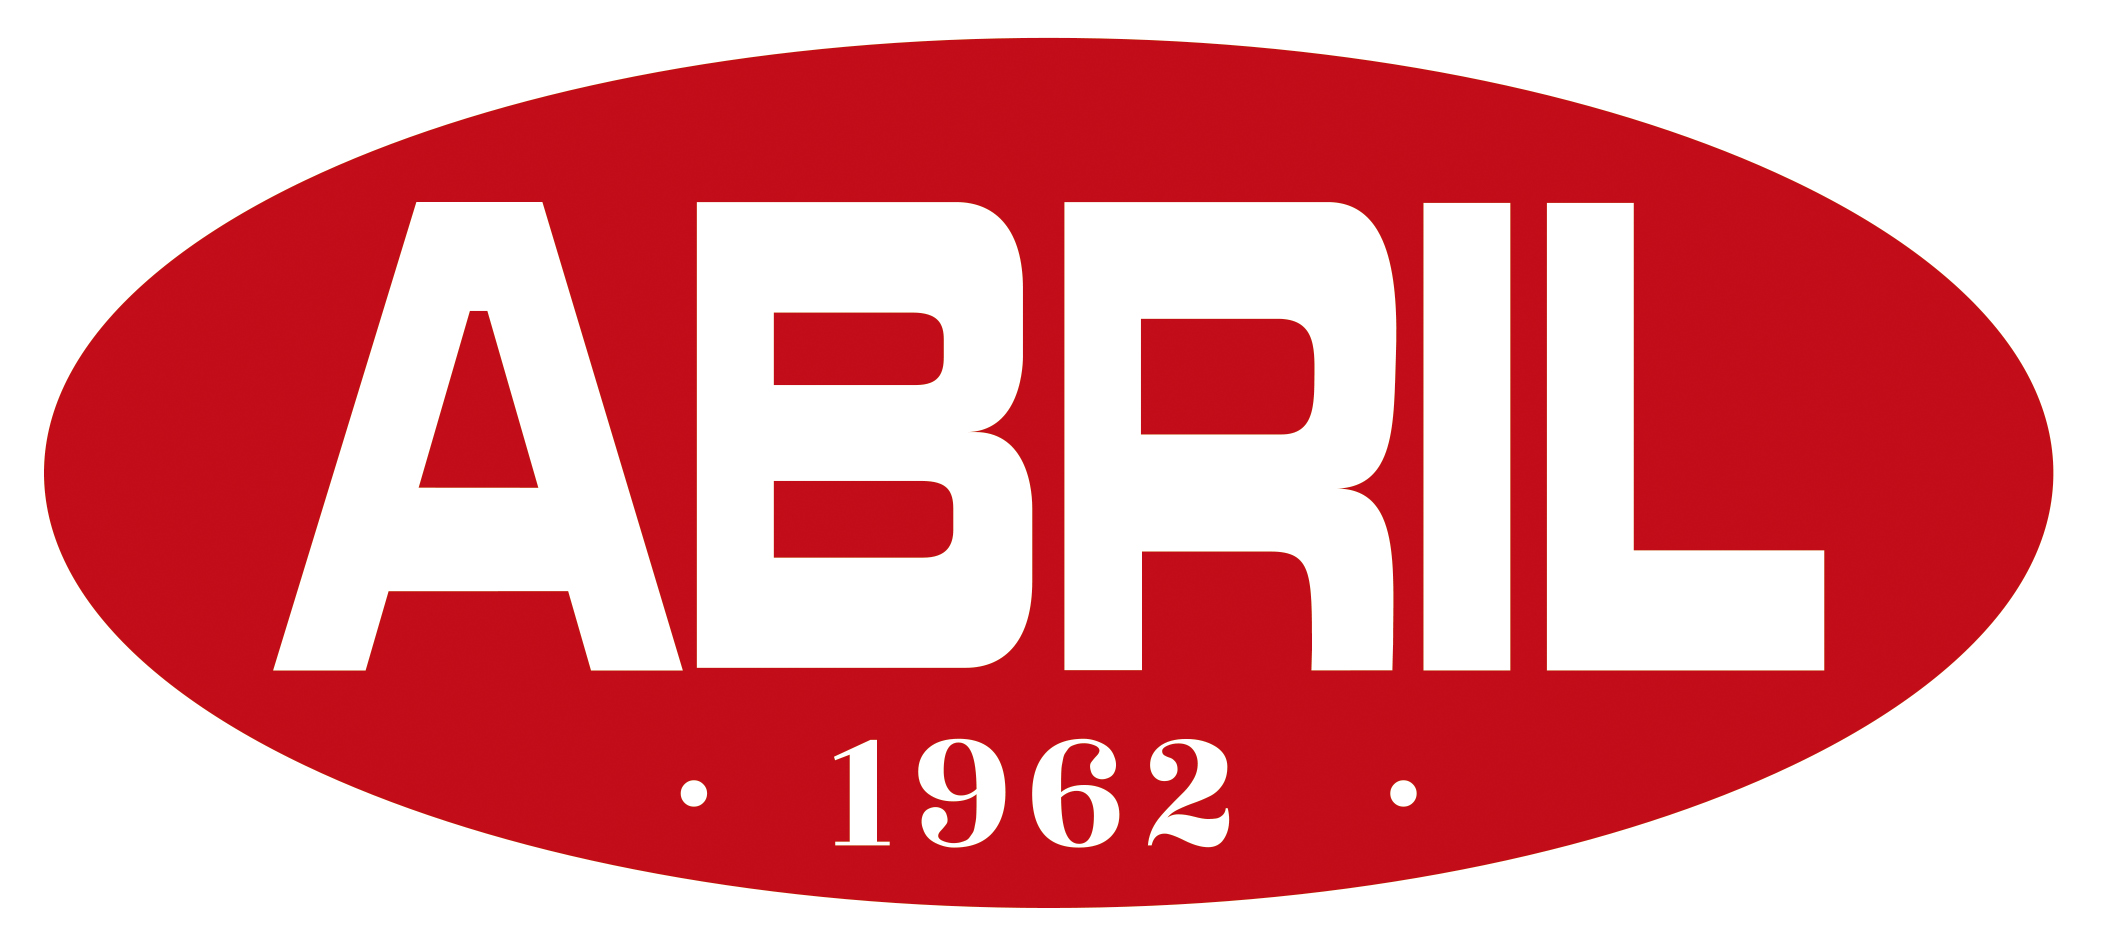 Aceites ABRIL logo